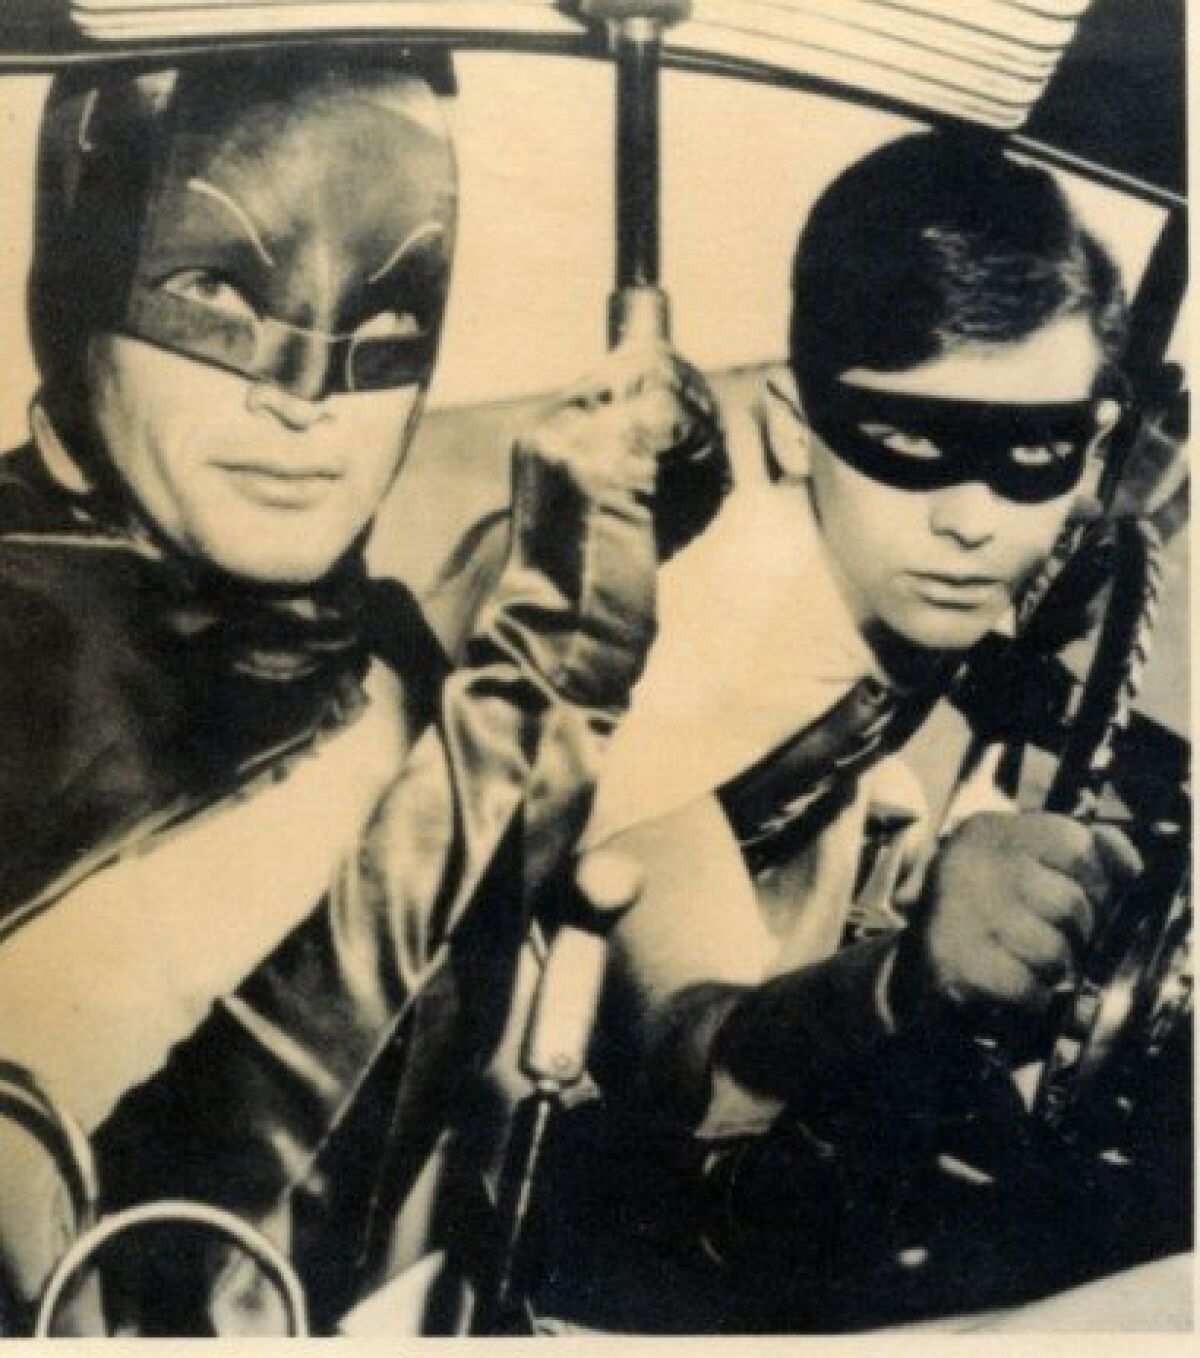 TV's Adam West and Burt Ward as Batman and Robin.